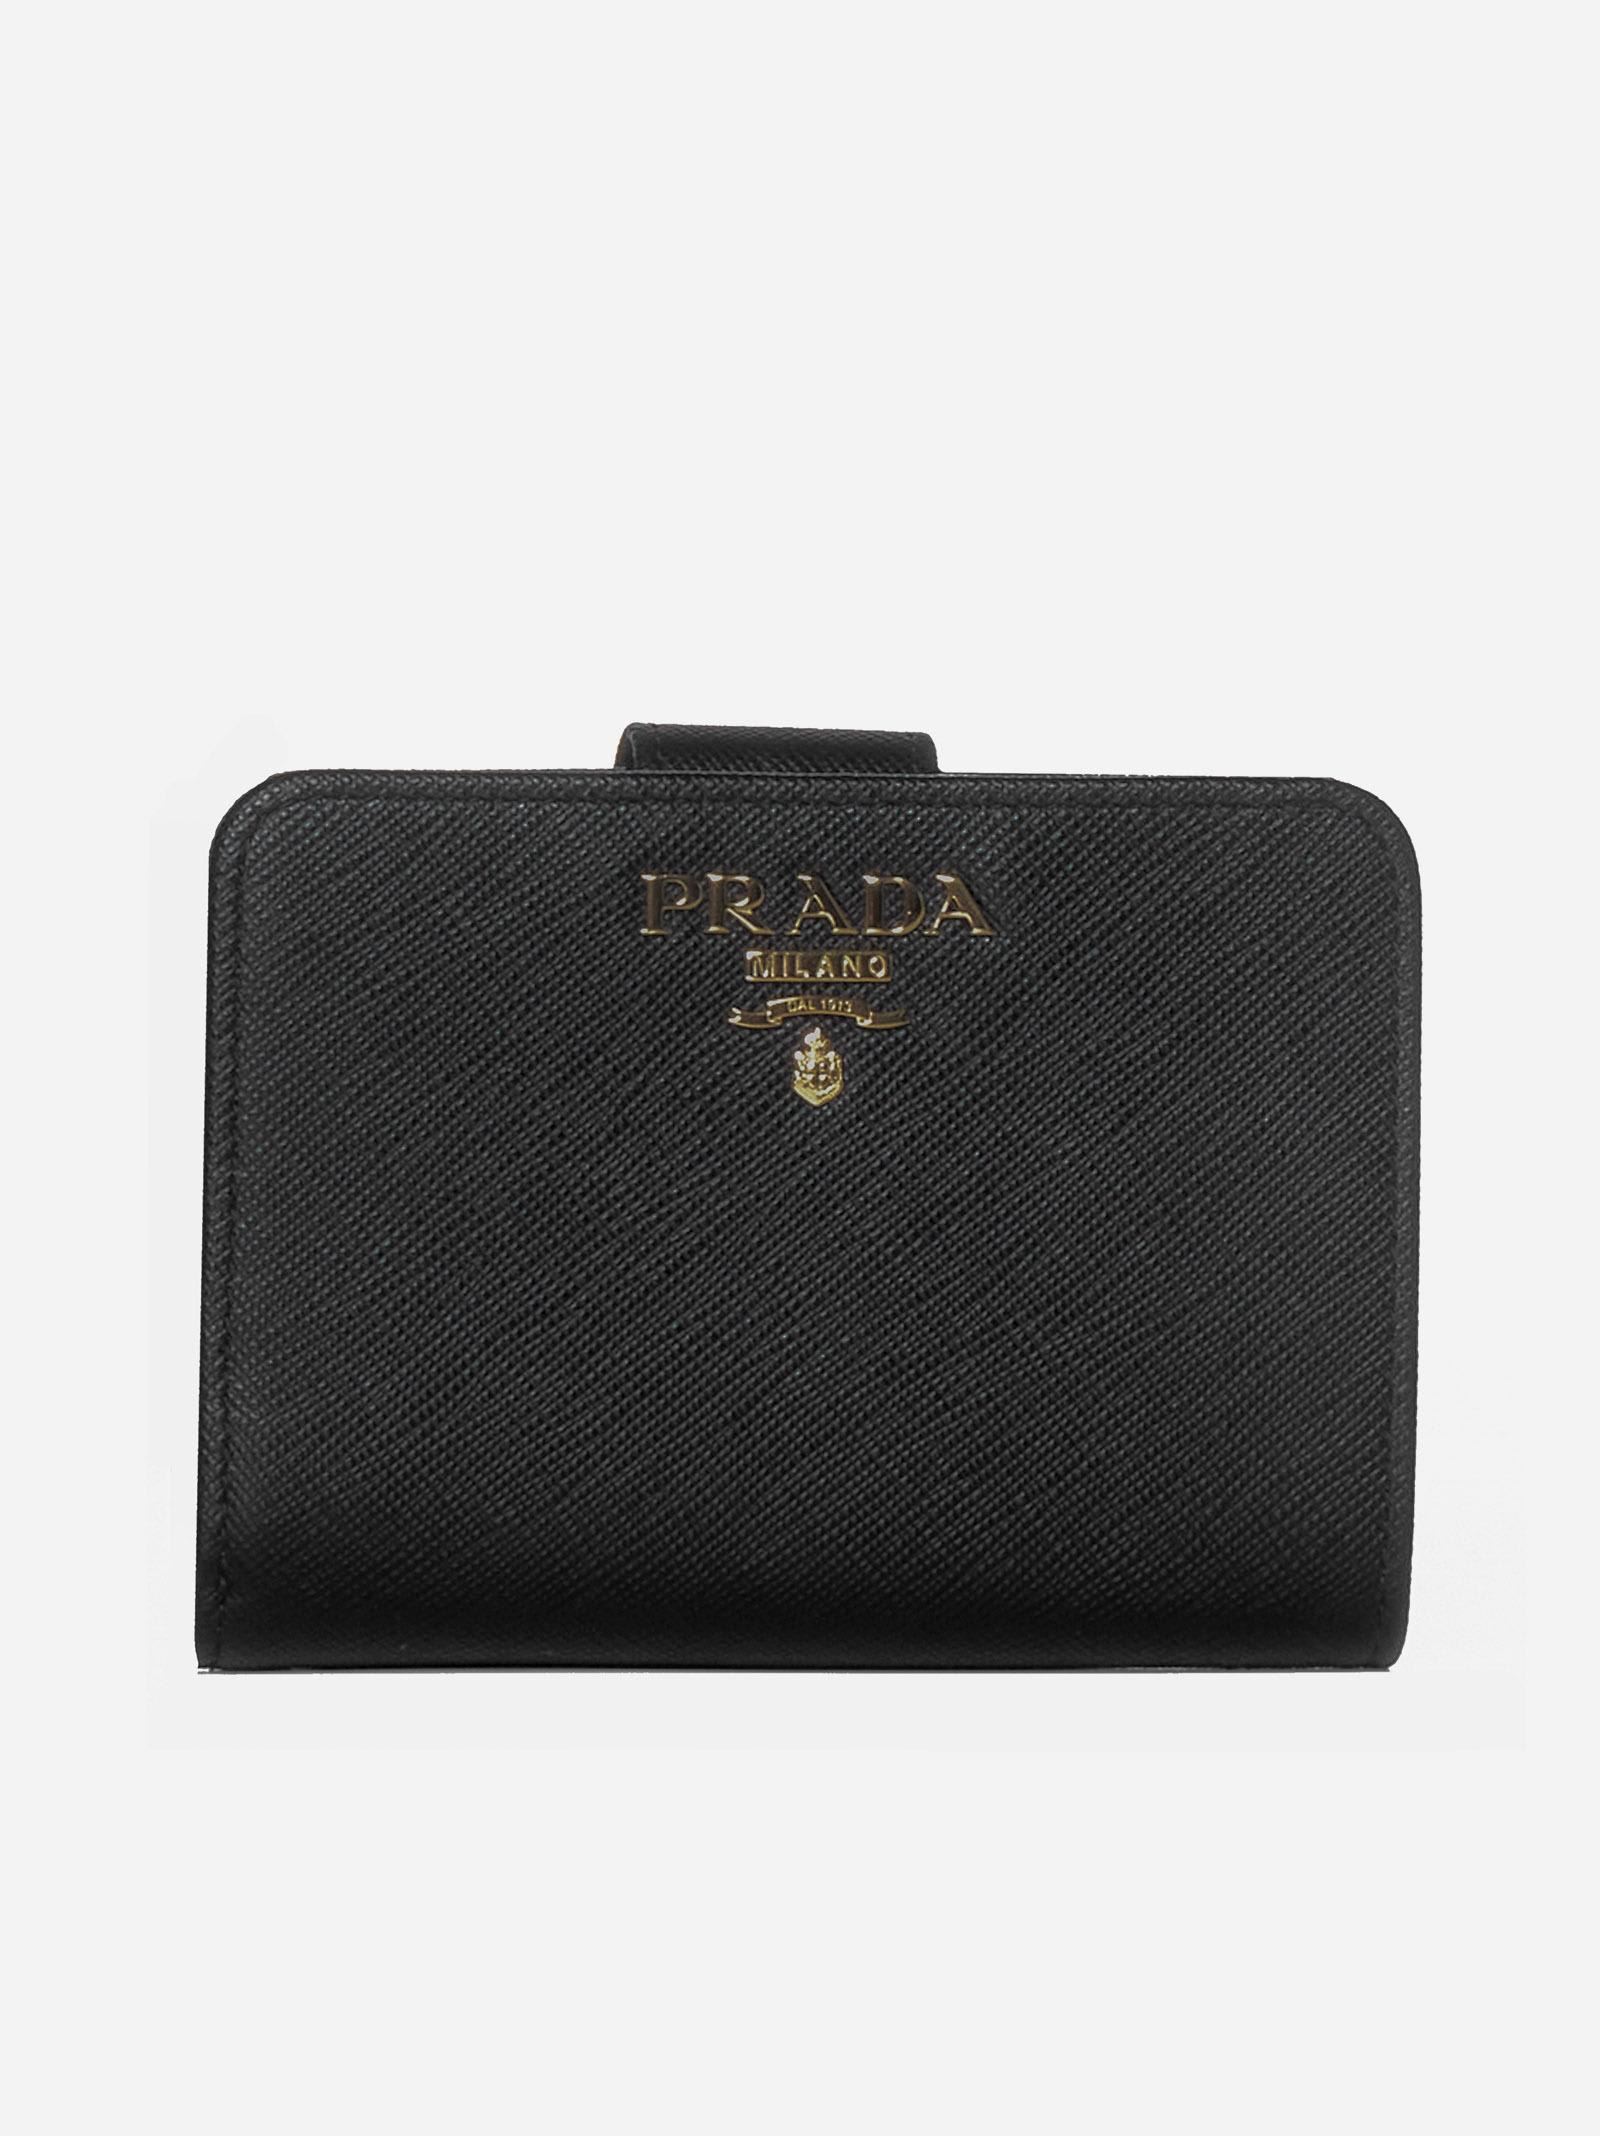 Prada Logo Saffiano Leather Wallet